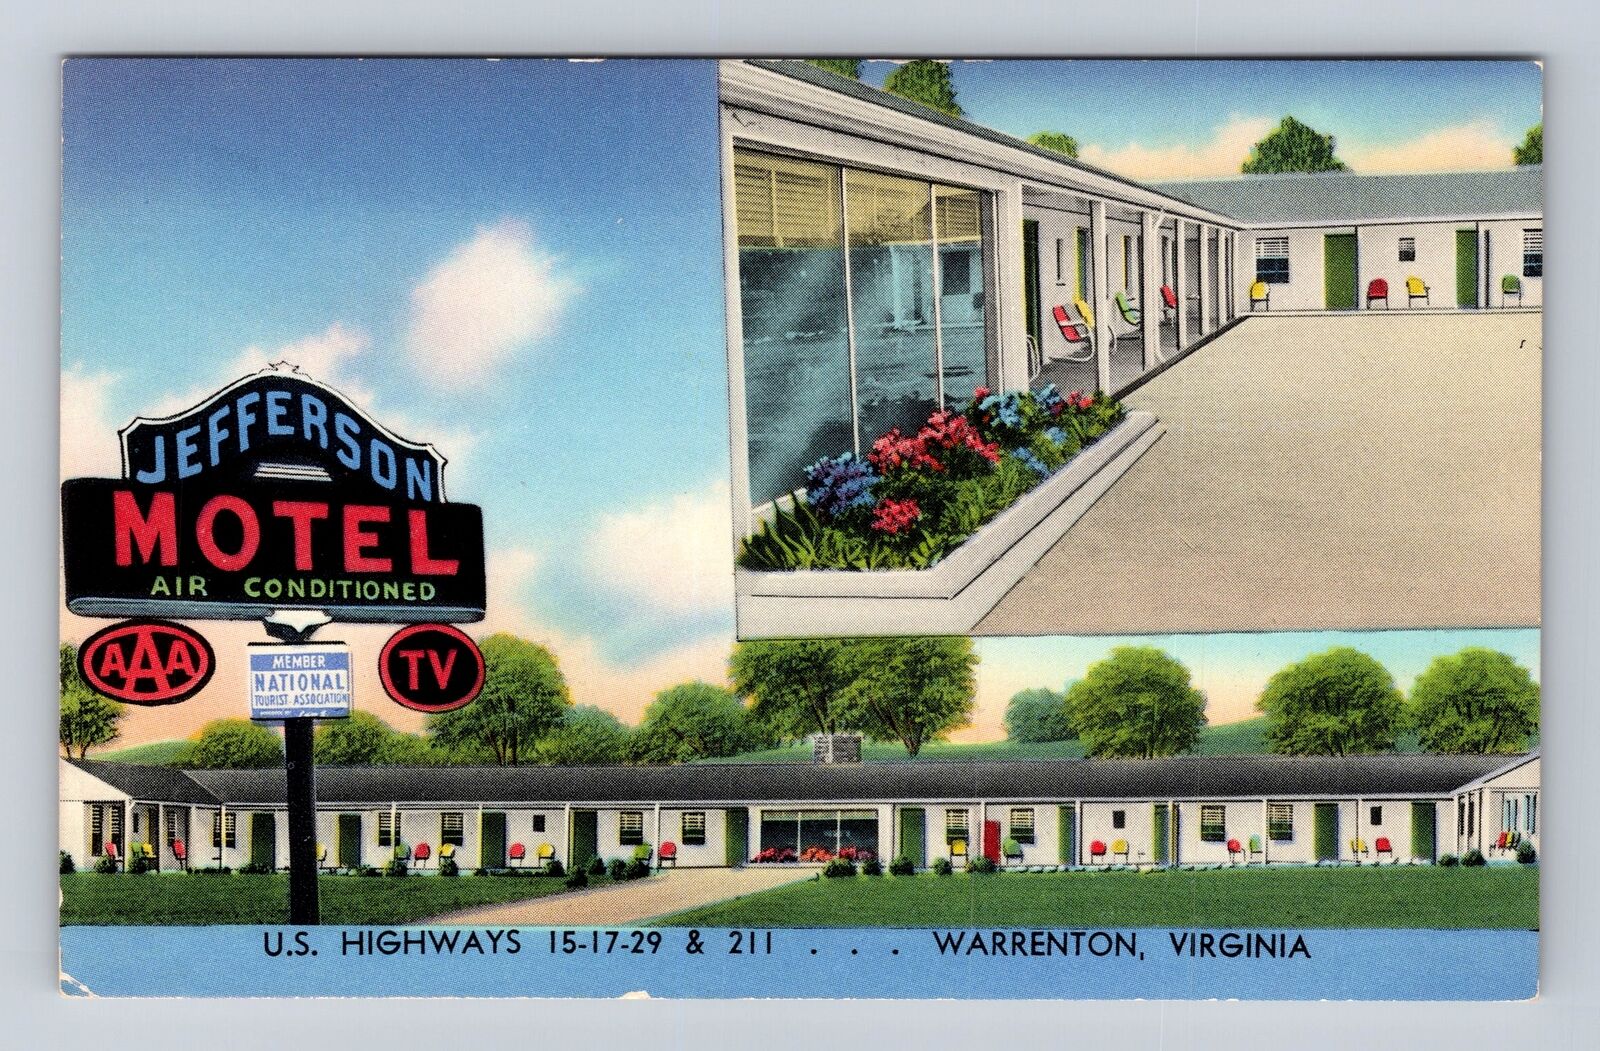 Warrenton VA-Virginia, Jefferson Motel, Highways 15-17-29 & 211 Vintage Postcard